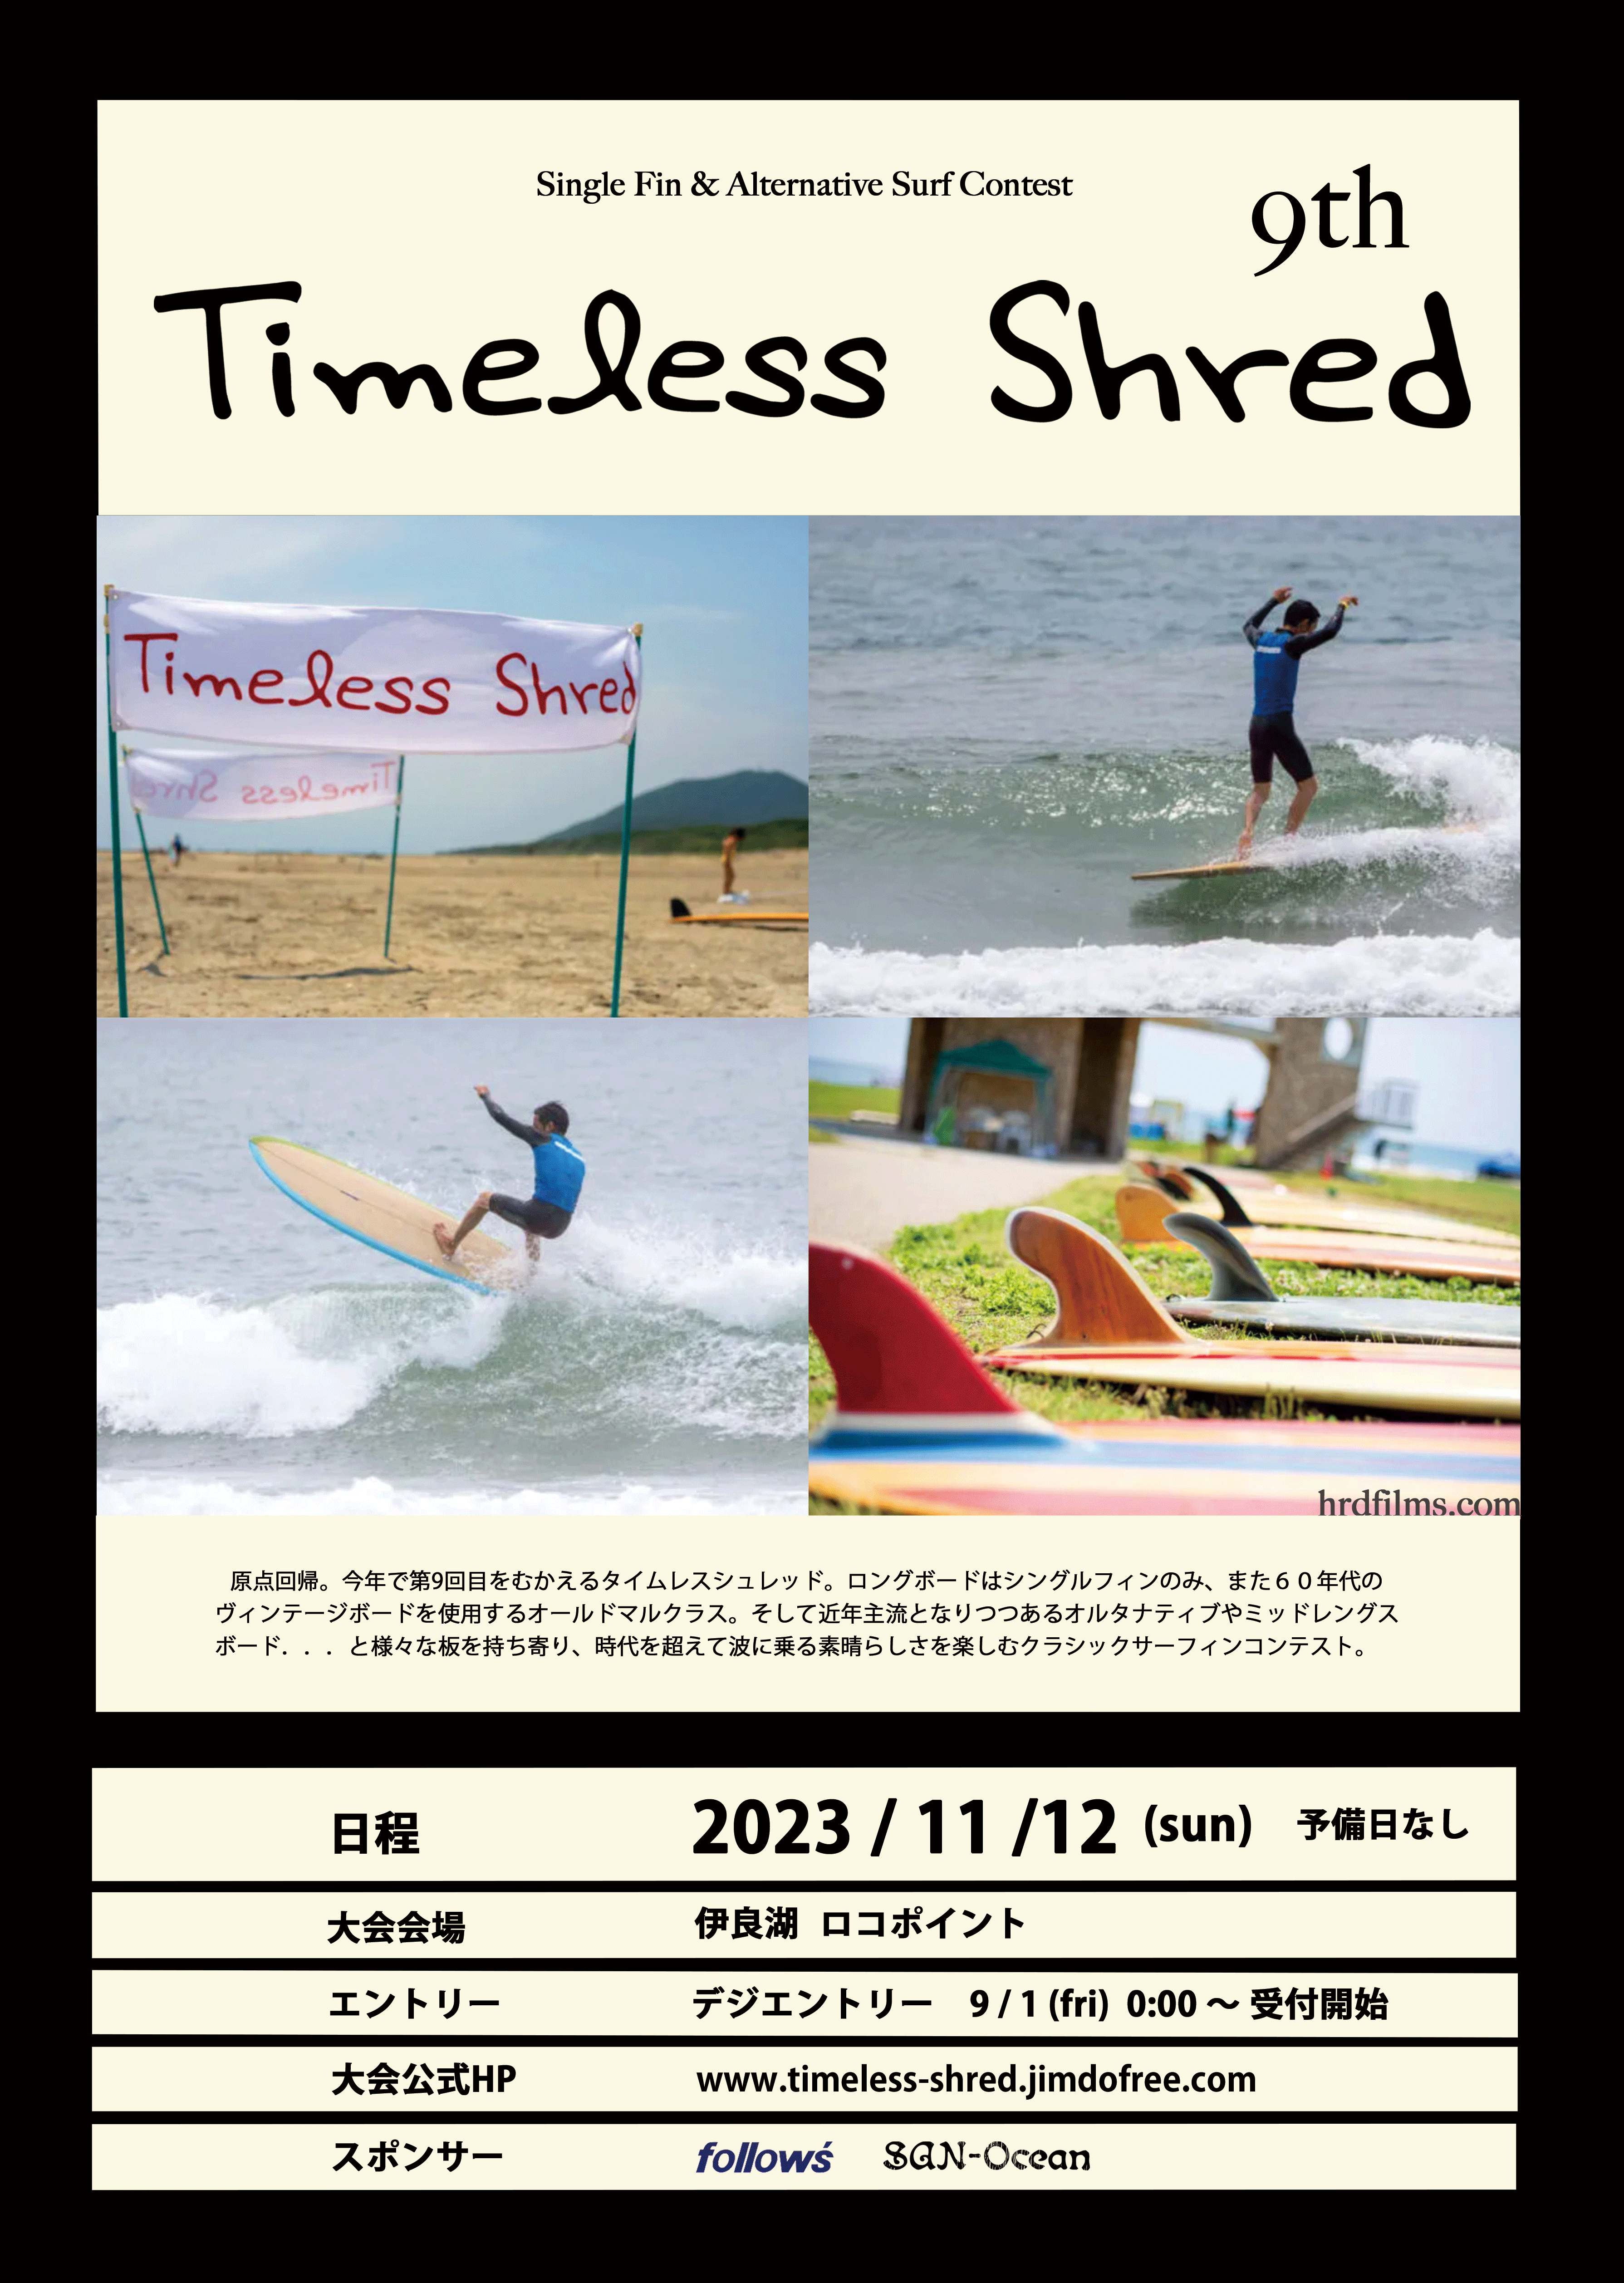 Timeless Shred 9th　エントリーは９月１日〜